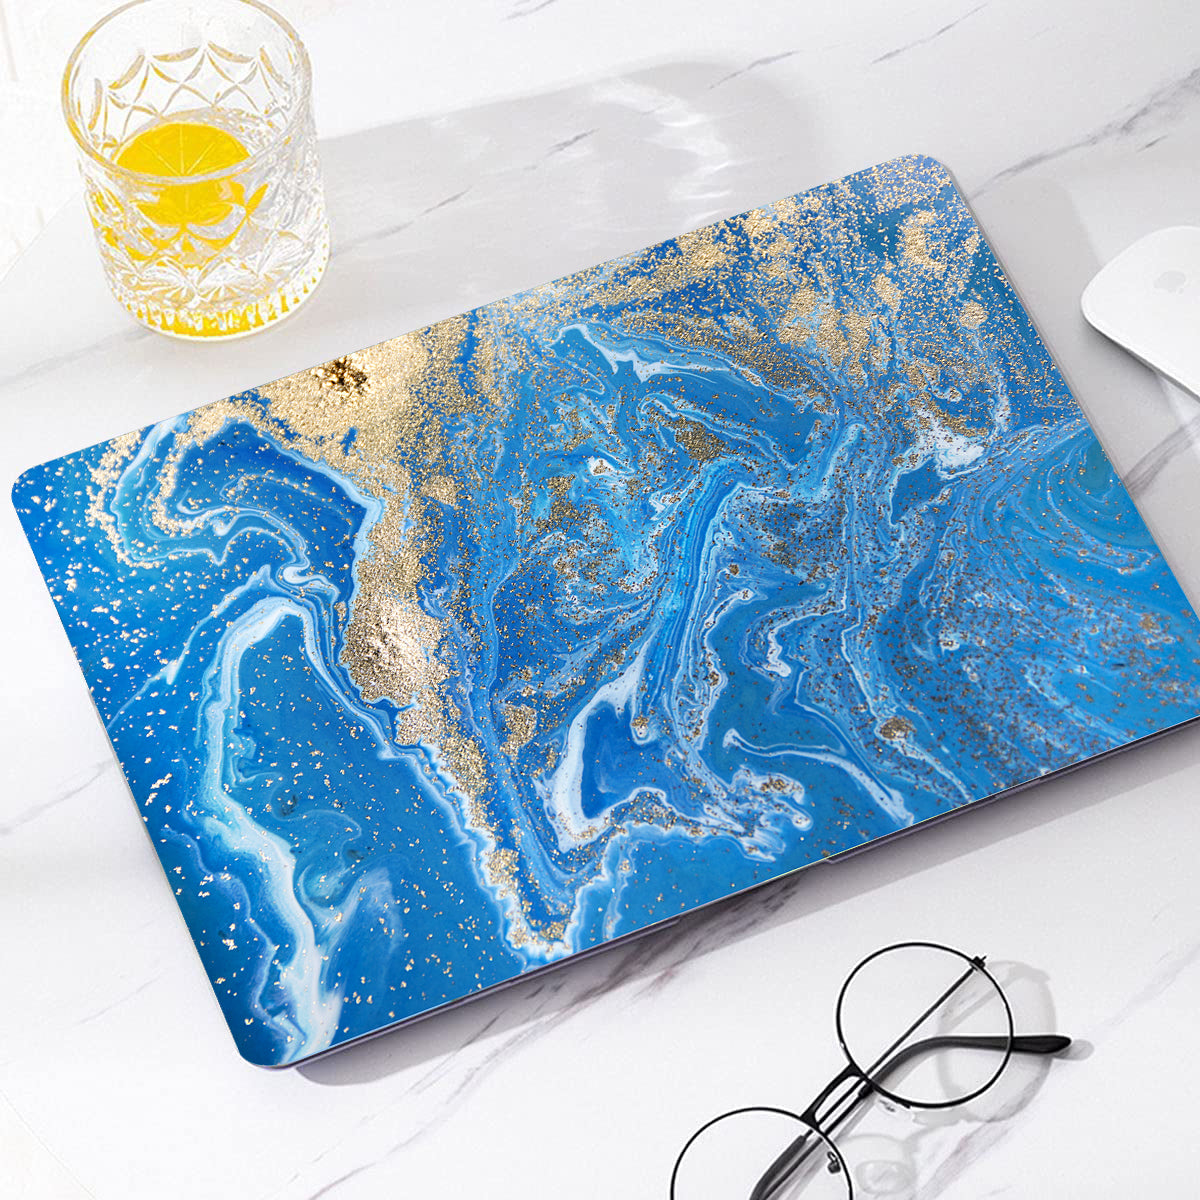 Macbook case customizable